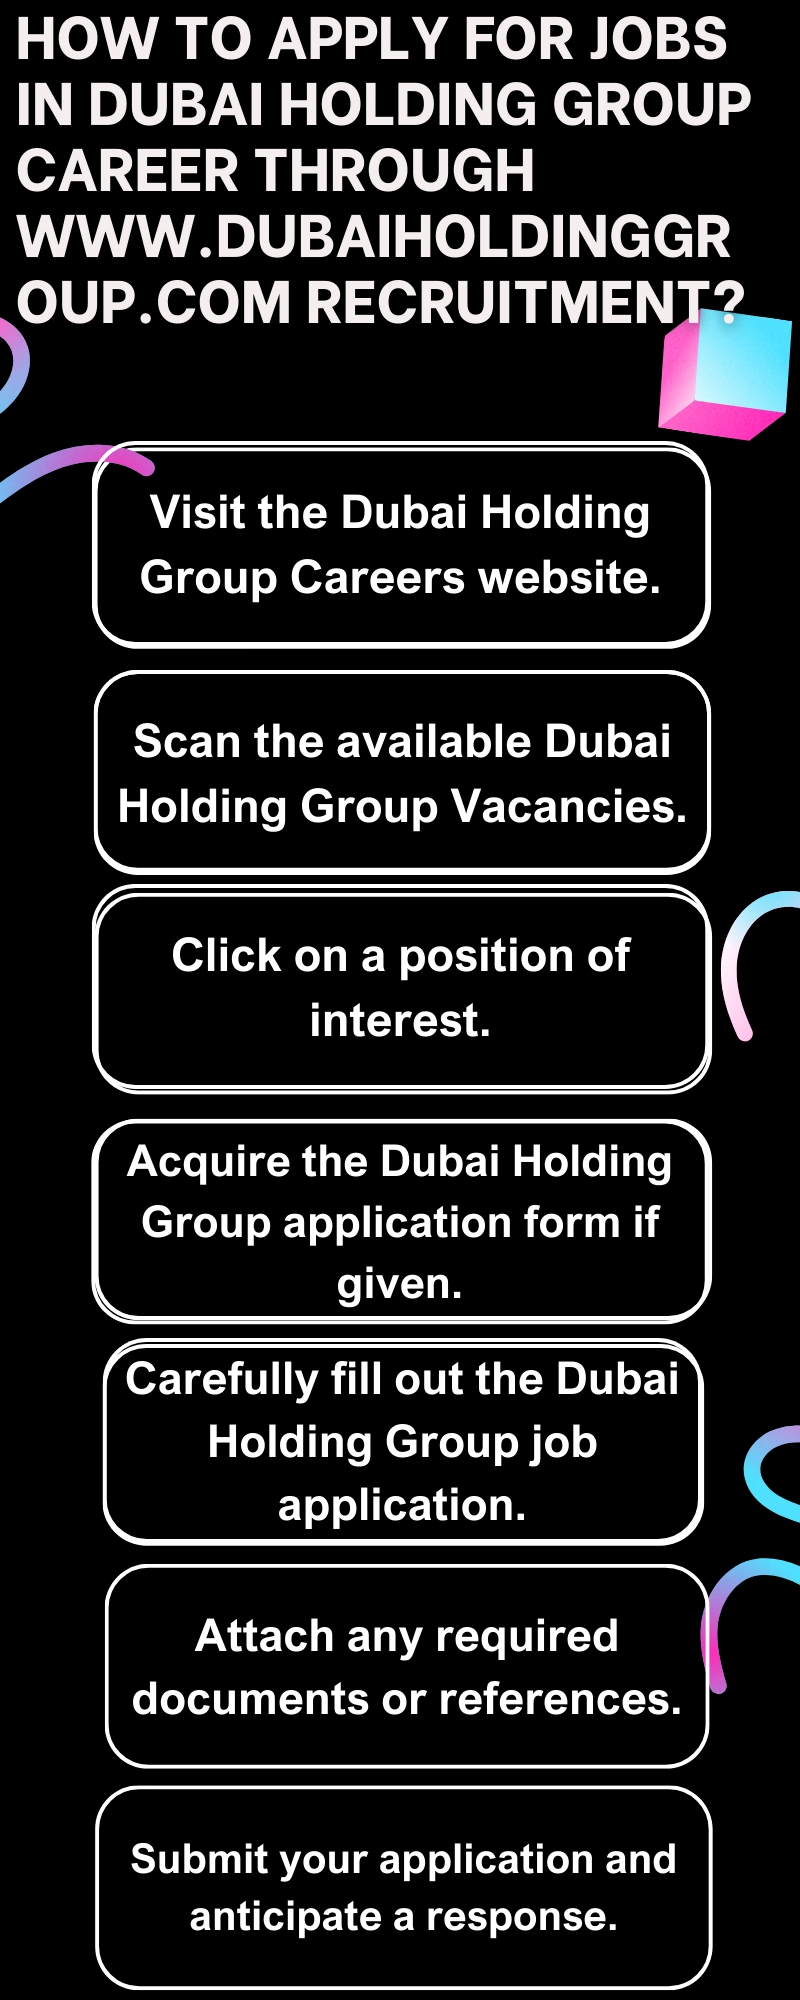 How to Apply for Jobs in Dubai Holding Group Career through www.dubaiholdinggroup.com recruitment?